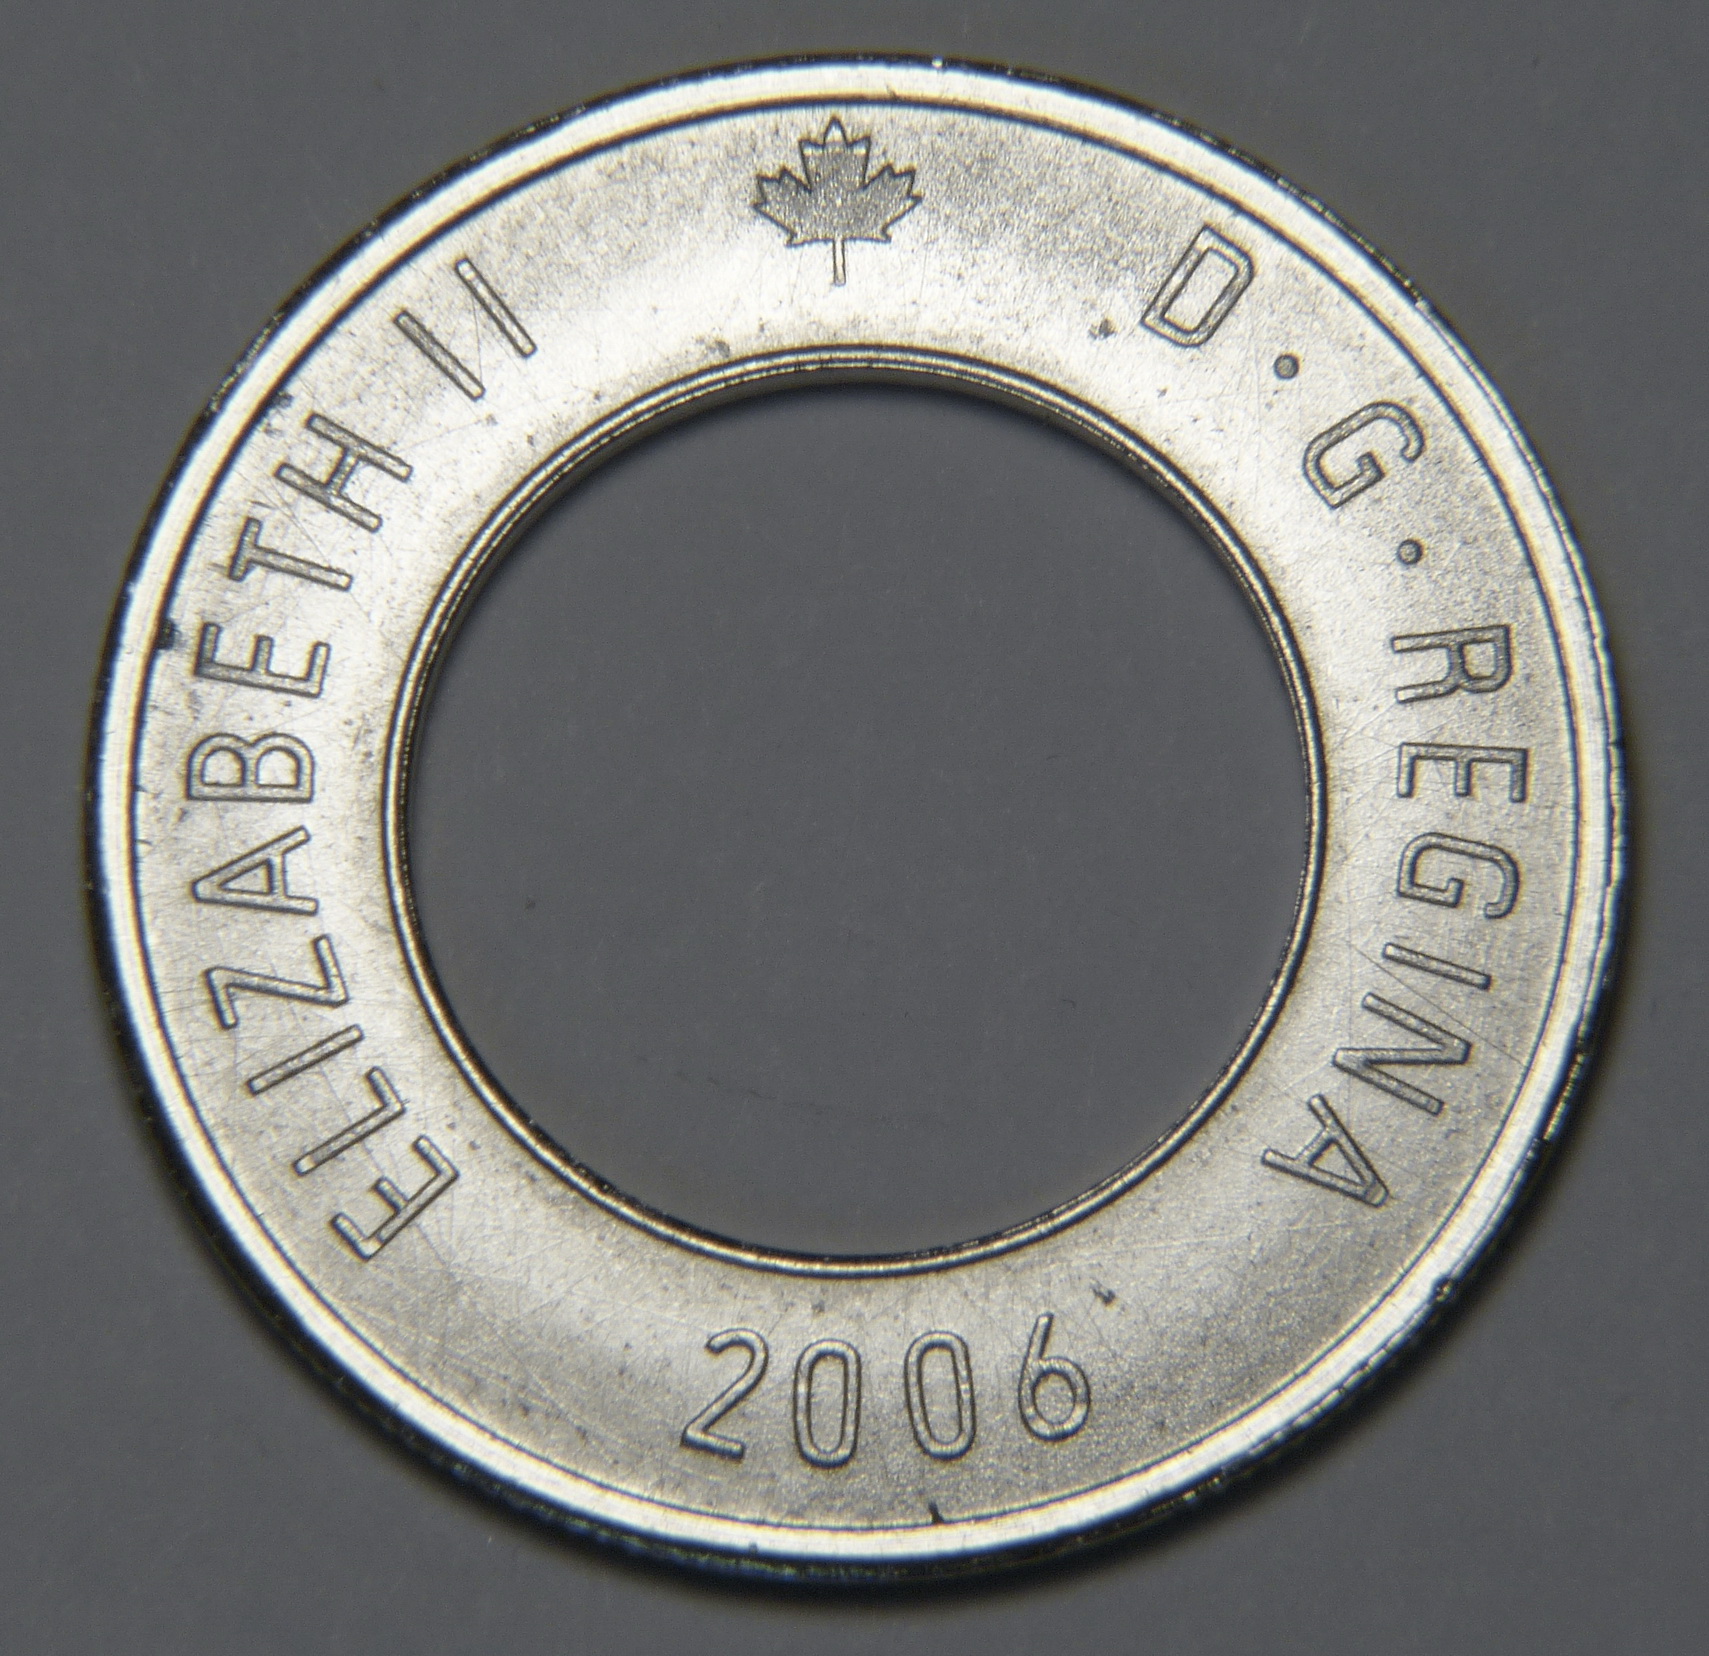 Counterfeit-2006-CoreRemove-06.JPG